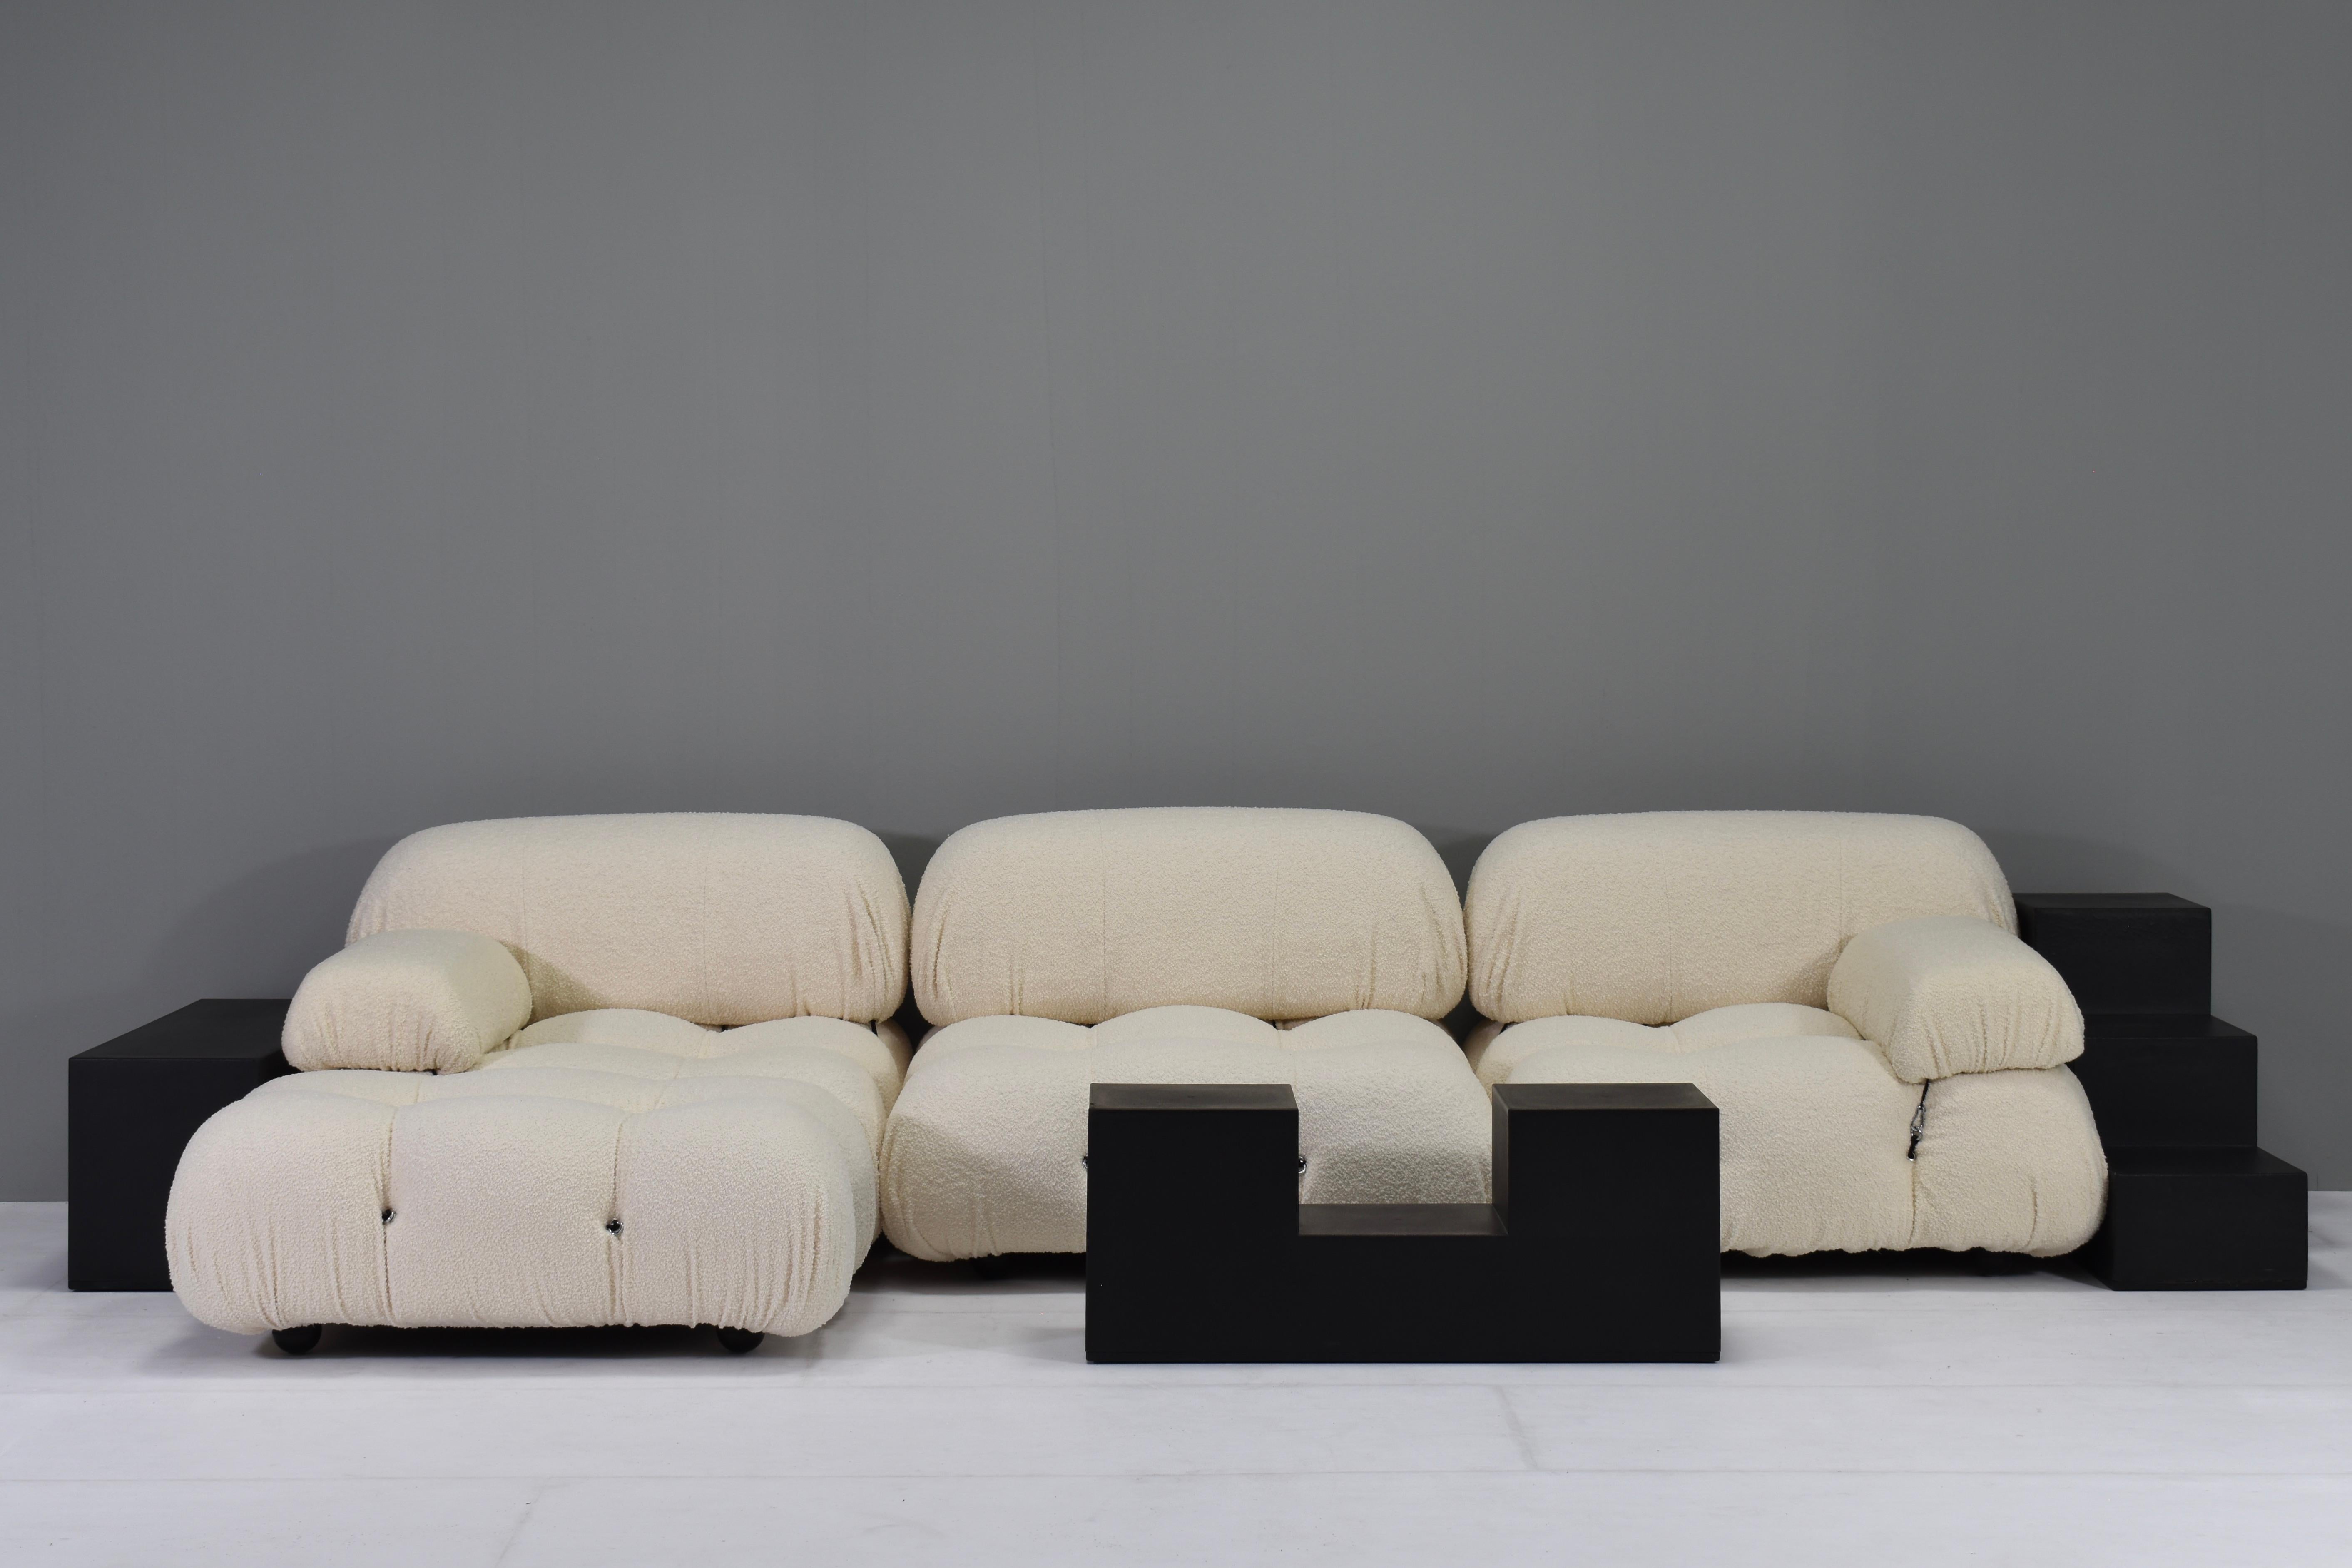 Mid-Century Modern Camaleonda Sectional Sofa by Mario Bellini for B&B Italia, New Upholstered